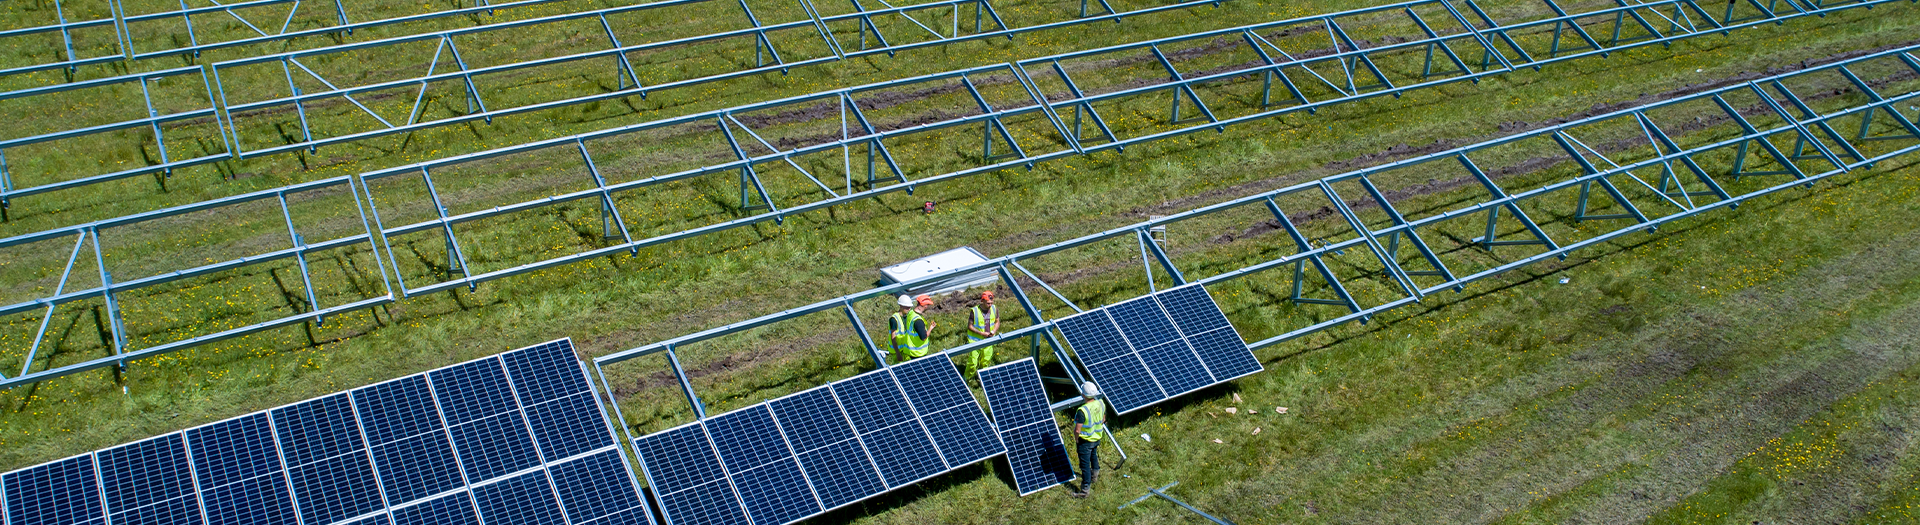 Vital Energi Swansea Bay University Health Board Solar Farm South Field 4 1920X525